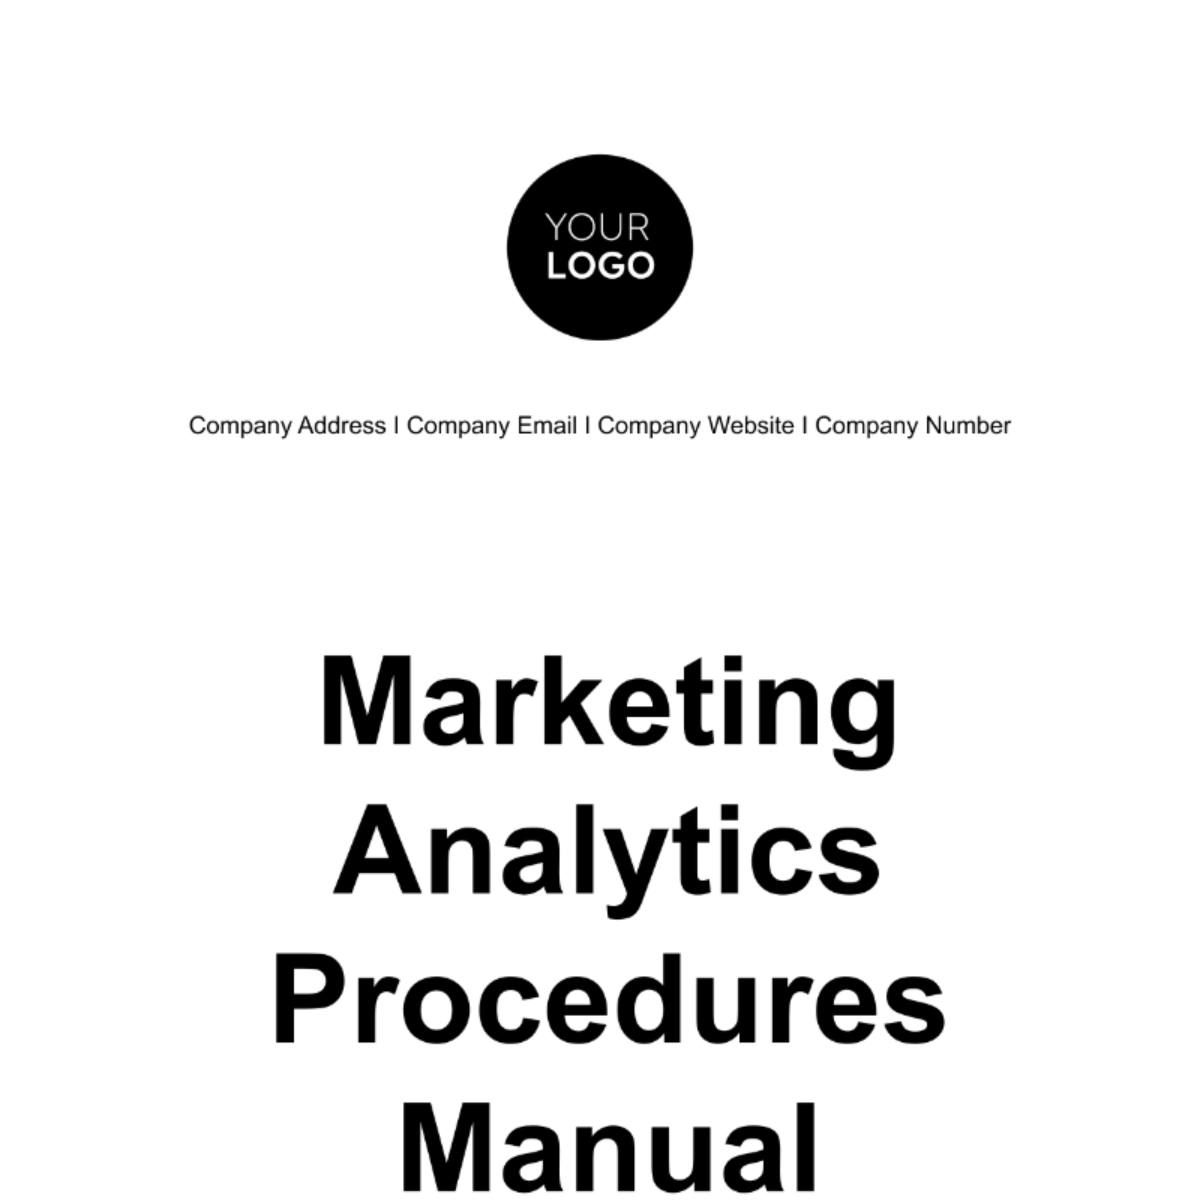 Marketing Analytics Procedures Manual Template